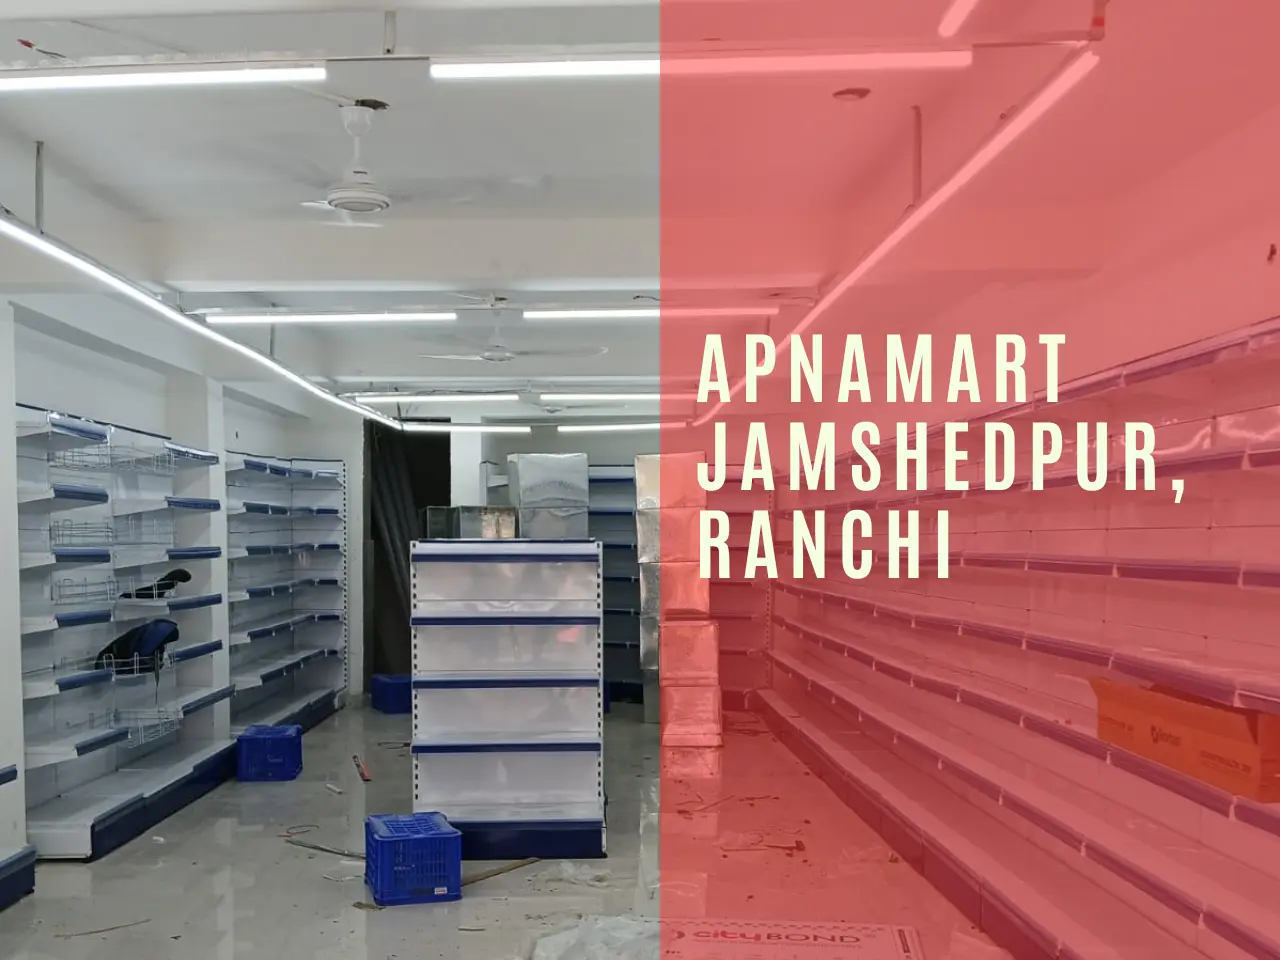 Apnamart jamshedpur, ranchi.webp